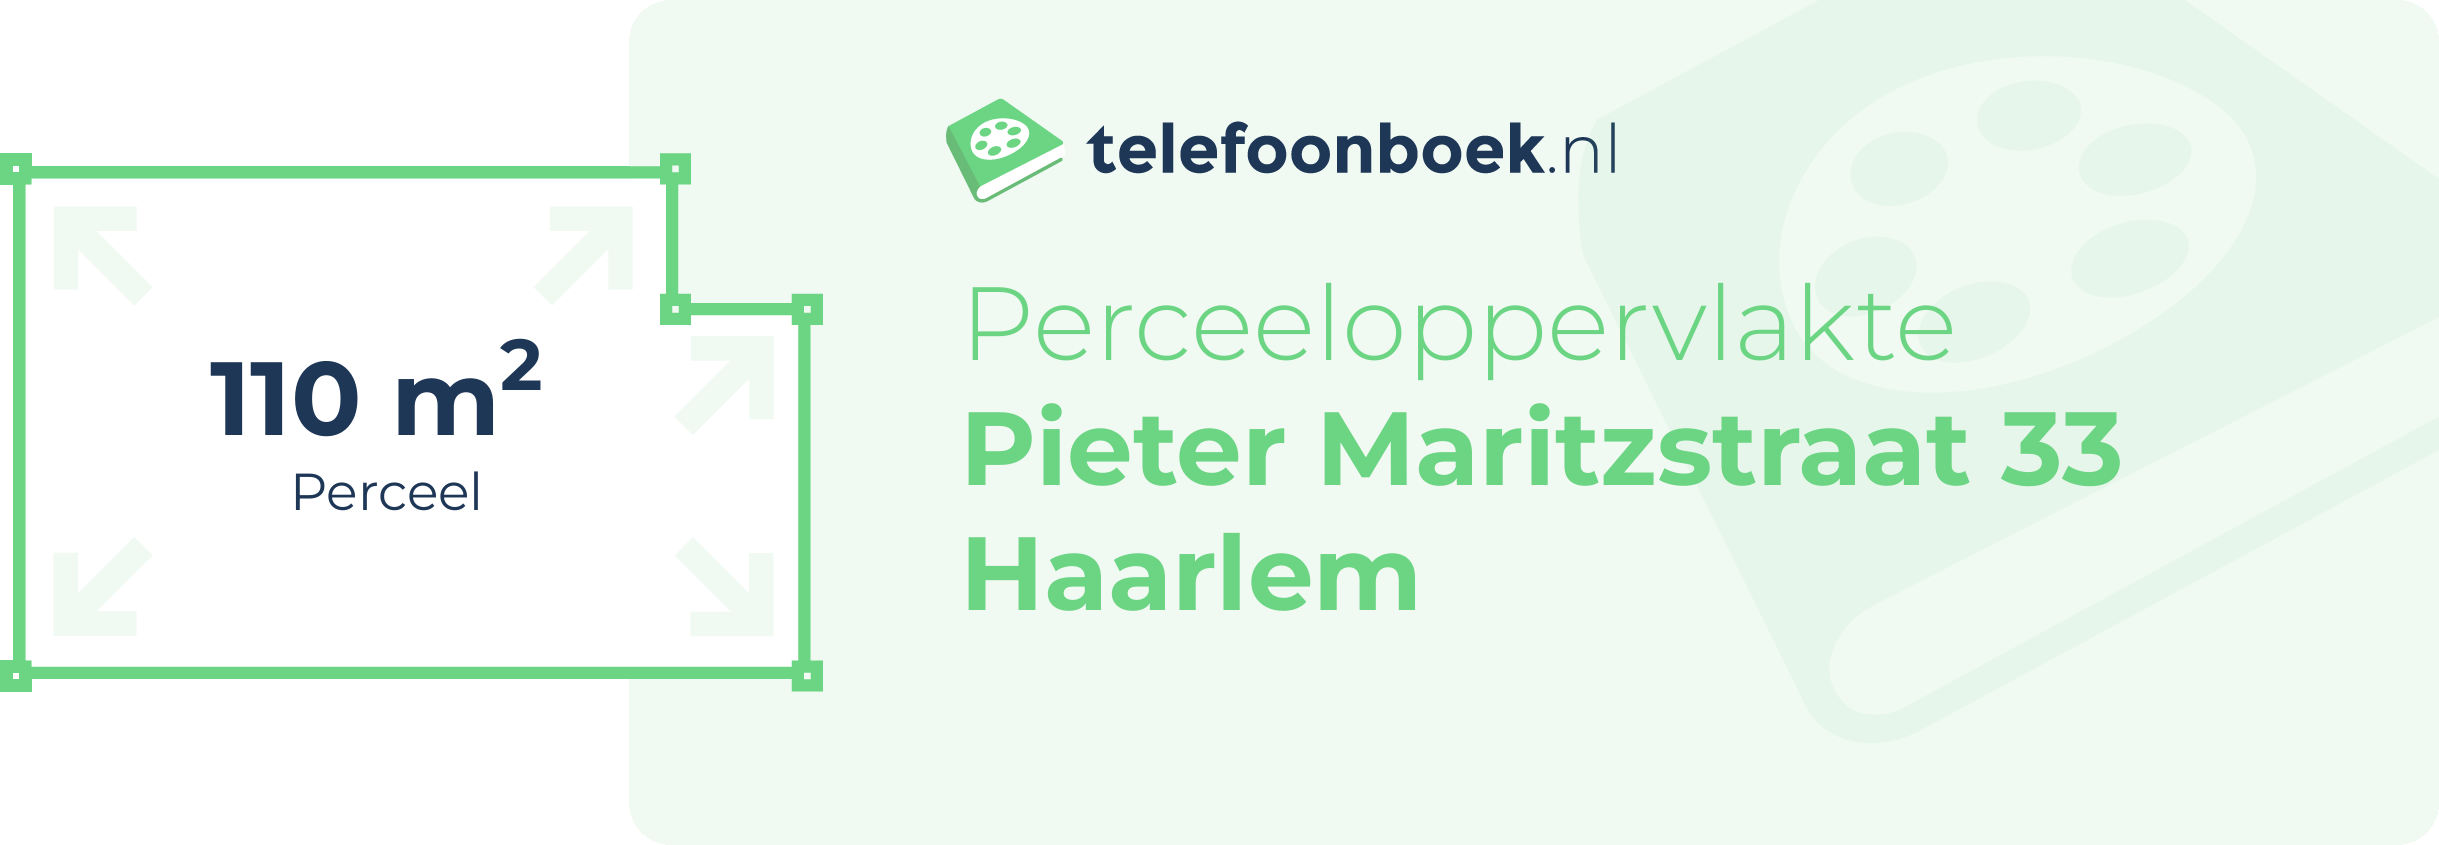 Perceeloppervlakte Pieter Maritzstraat 33 Haarlem